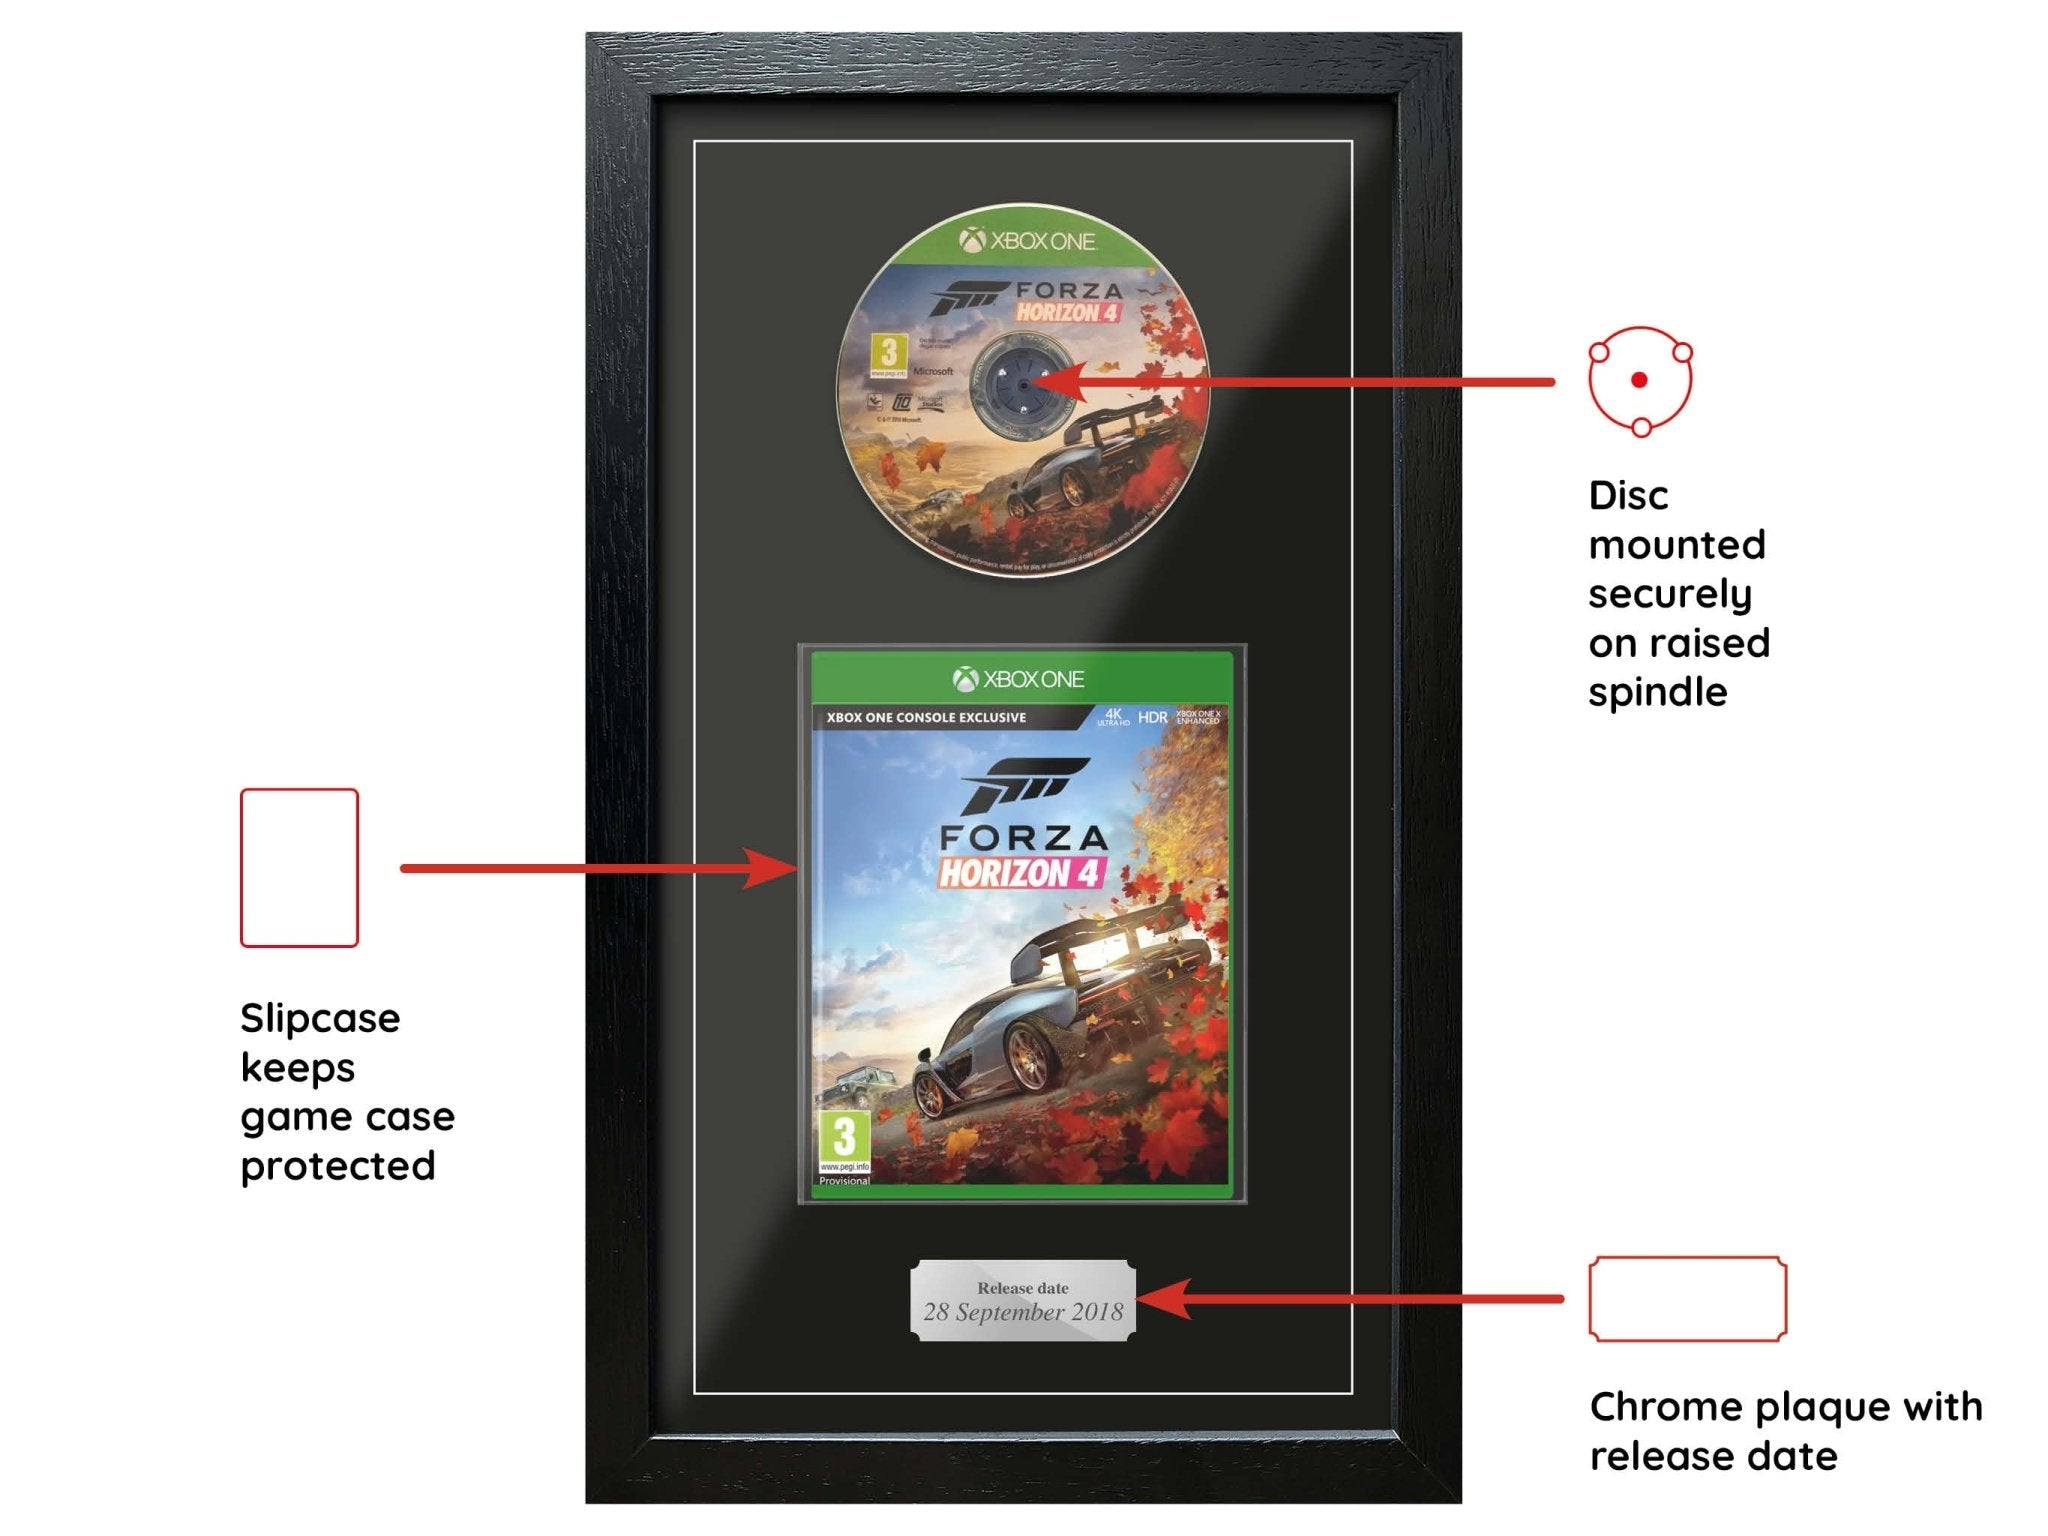 Forza Horizon 4 (Exhibition Range) Framed Game - Frame-A-Game